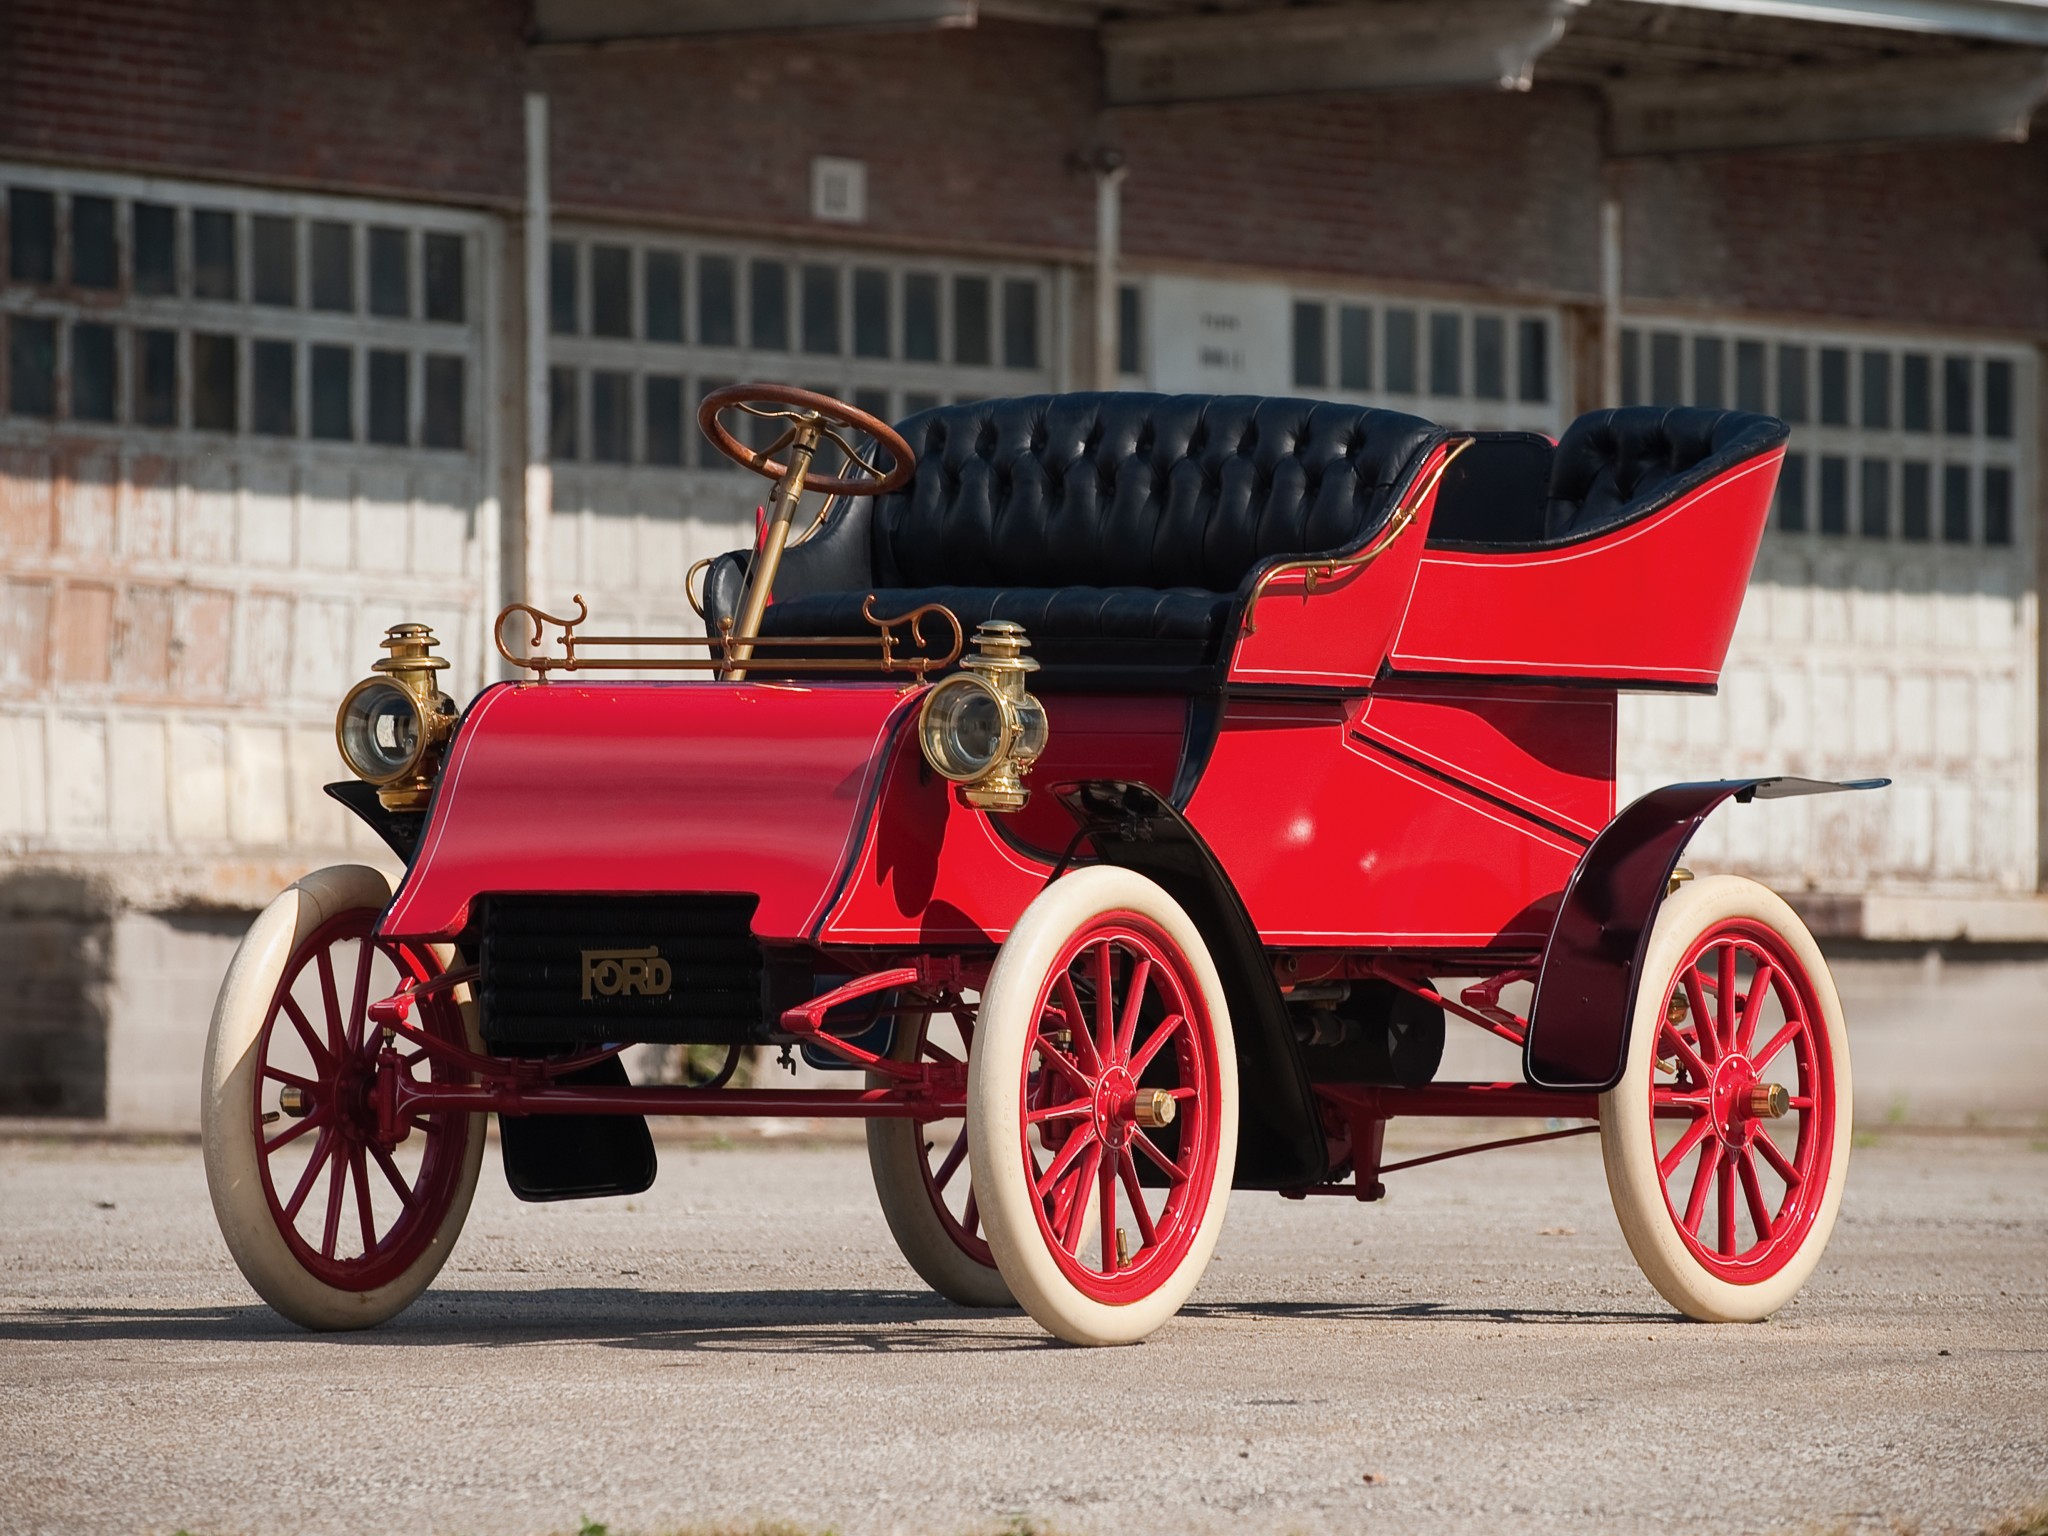 Год выпуска первой машины. Ford model a 1903. Форд модель b 1903. Ford model s 1903.